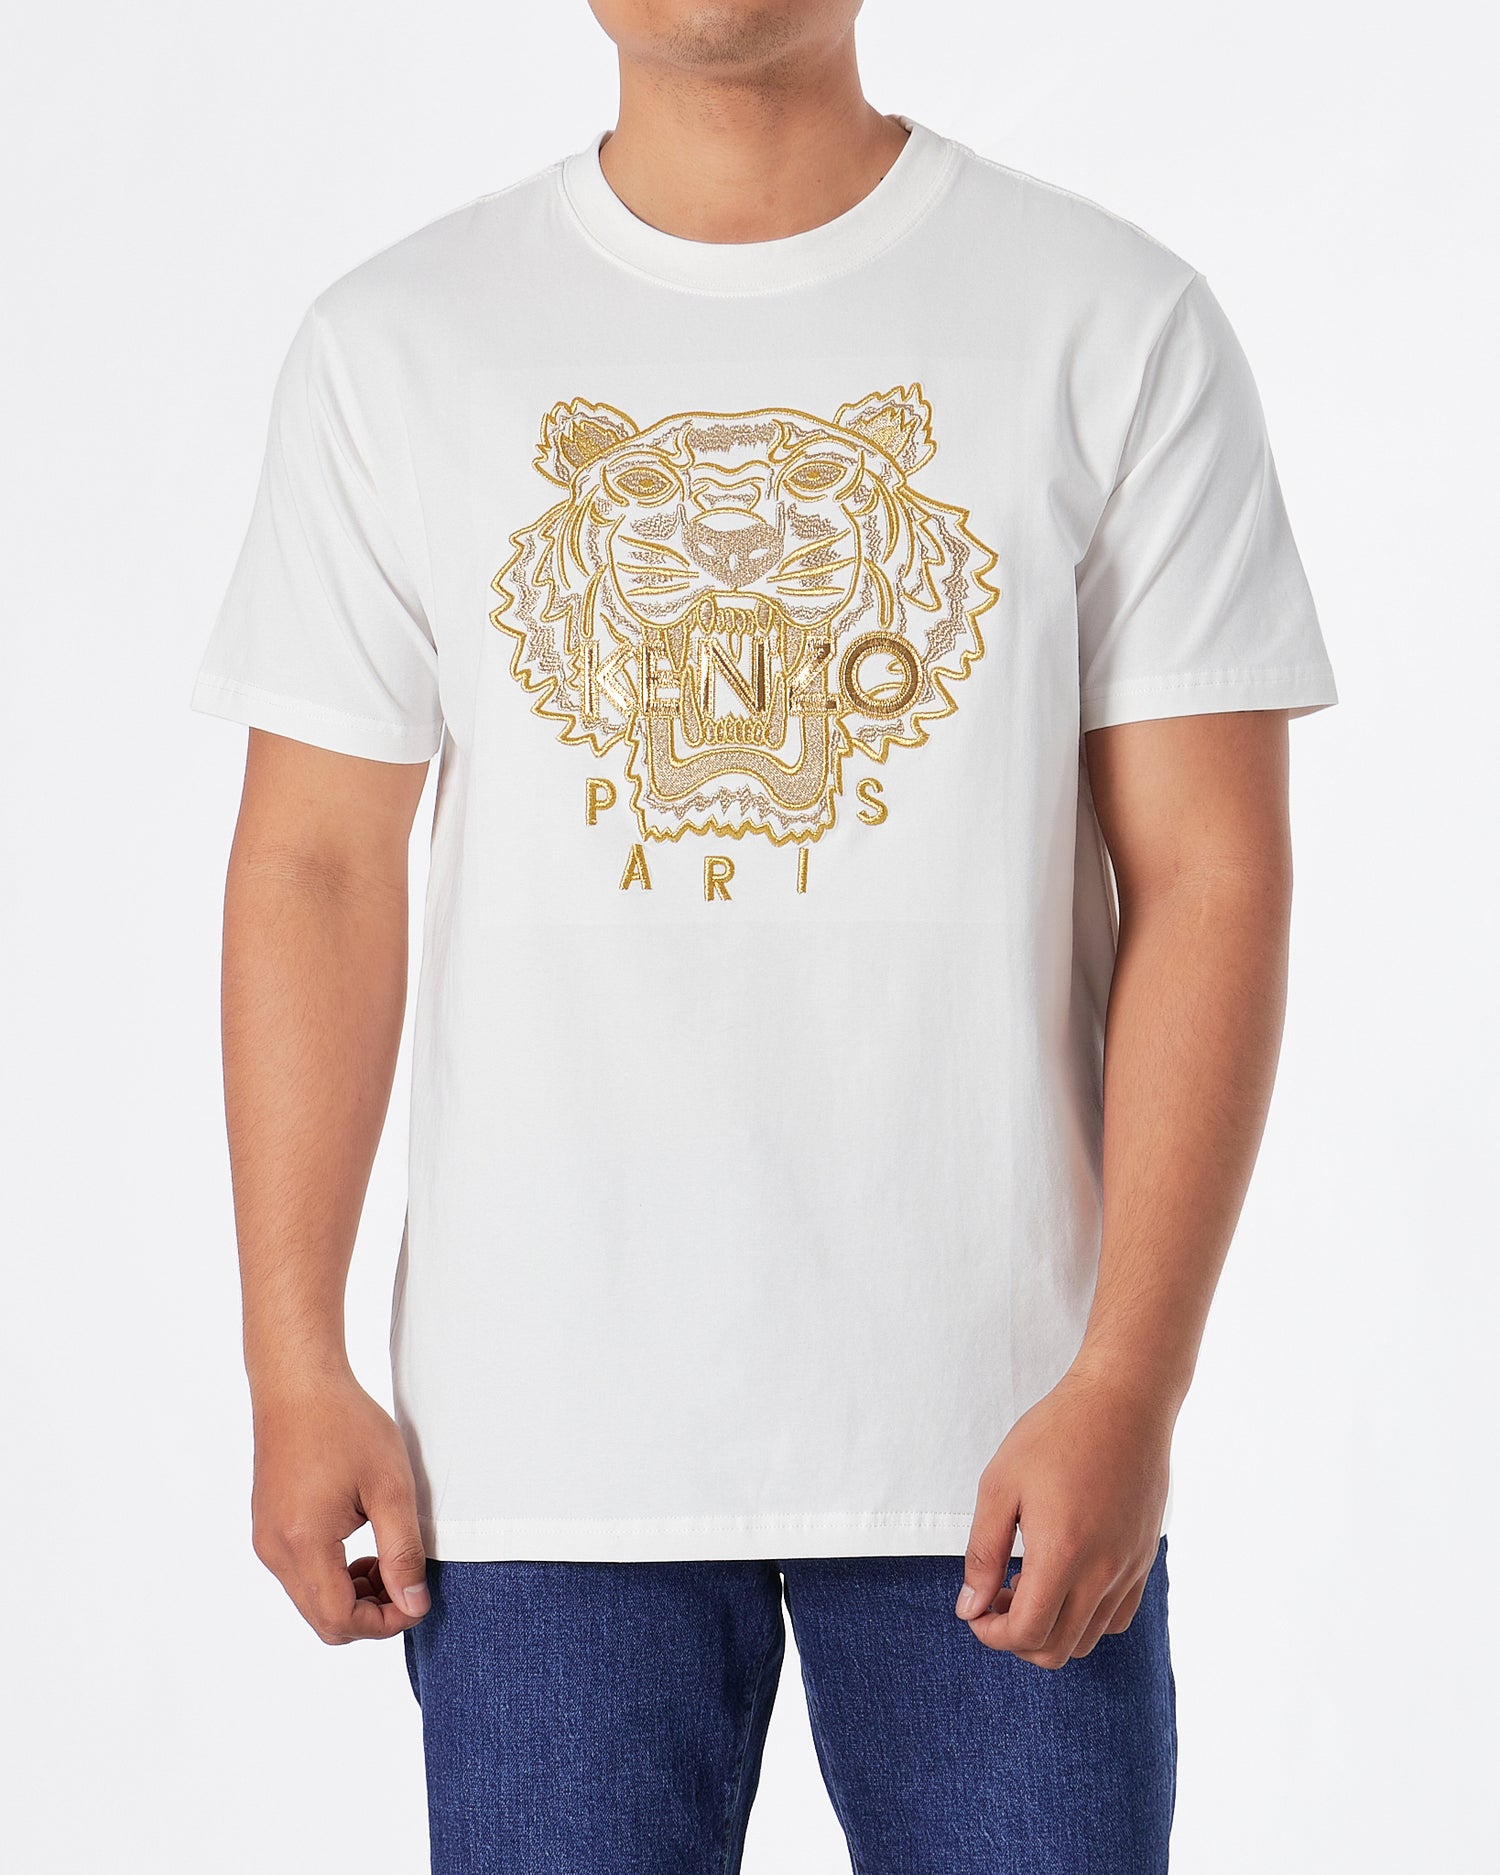 KEN Tiger Head Gold Embroidered Unisex White T-Shirt 24.90